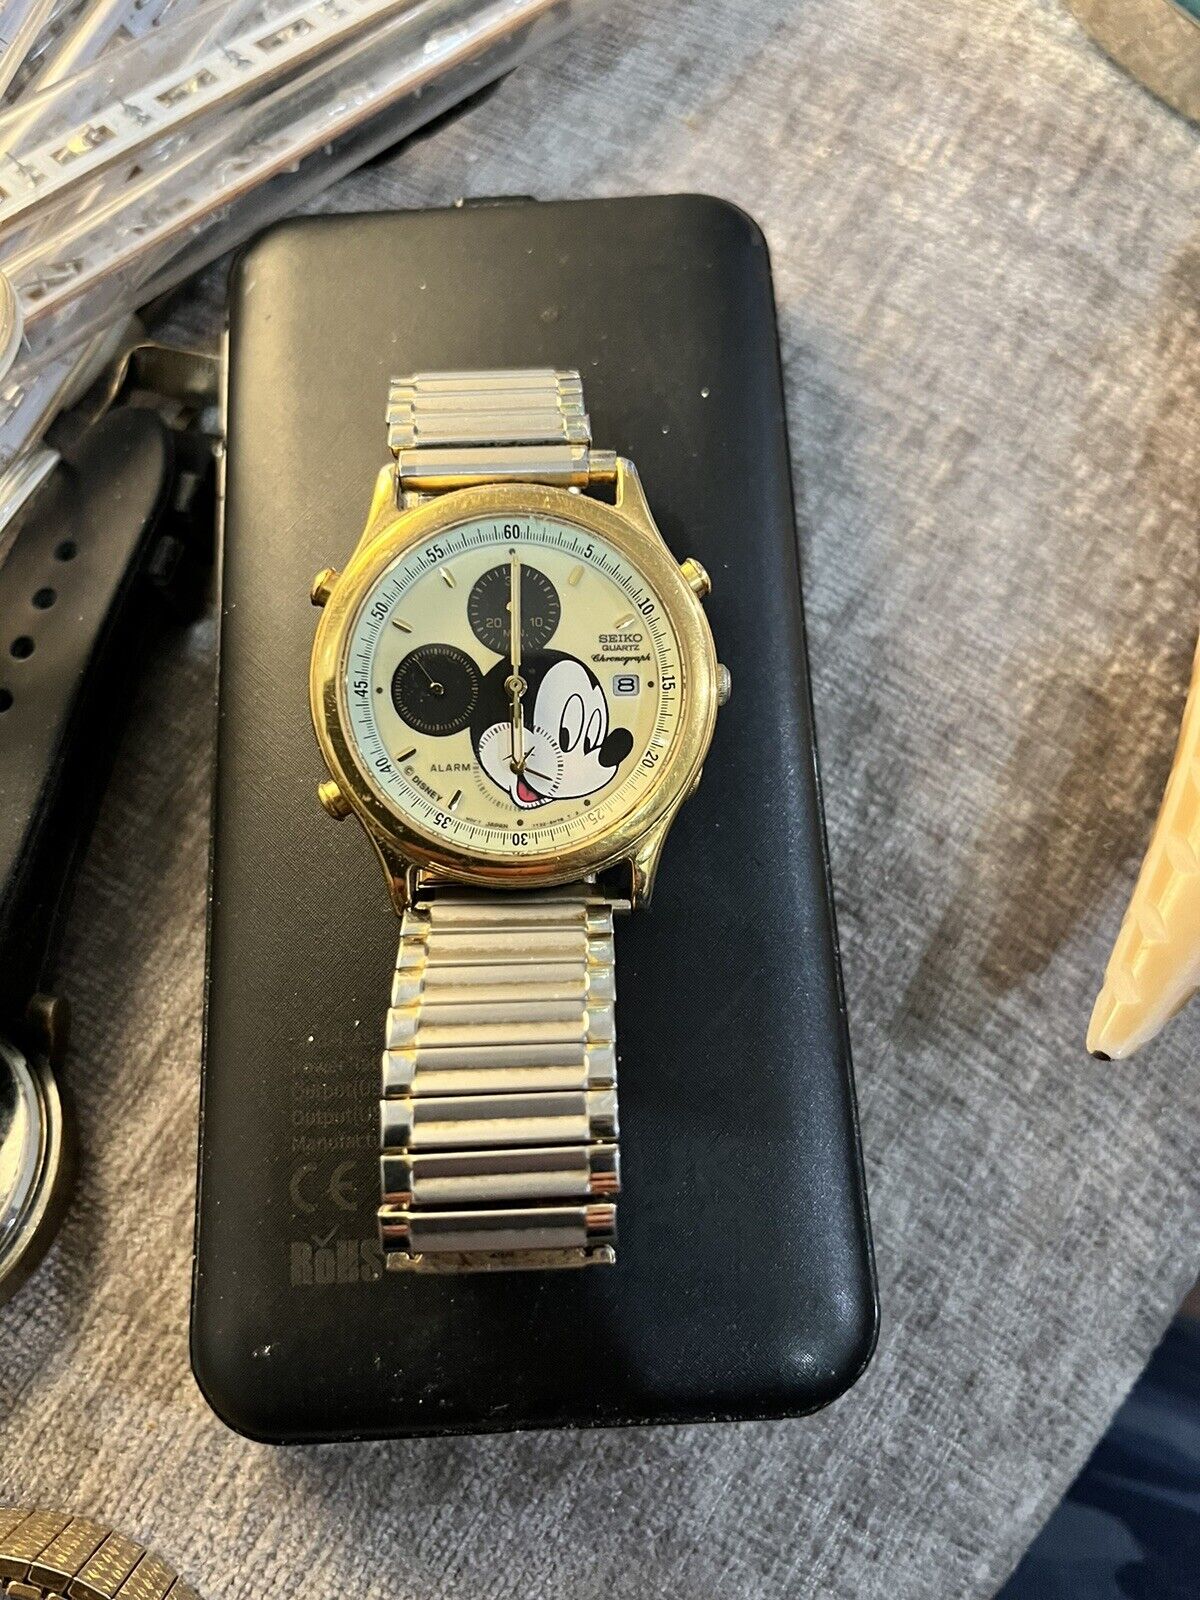 Seiko Quartz Chronograph Mickey Mouse Watch W/ Speidel Link Band